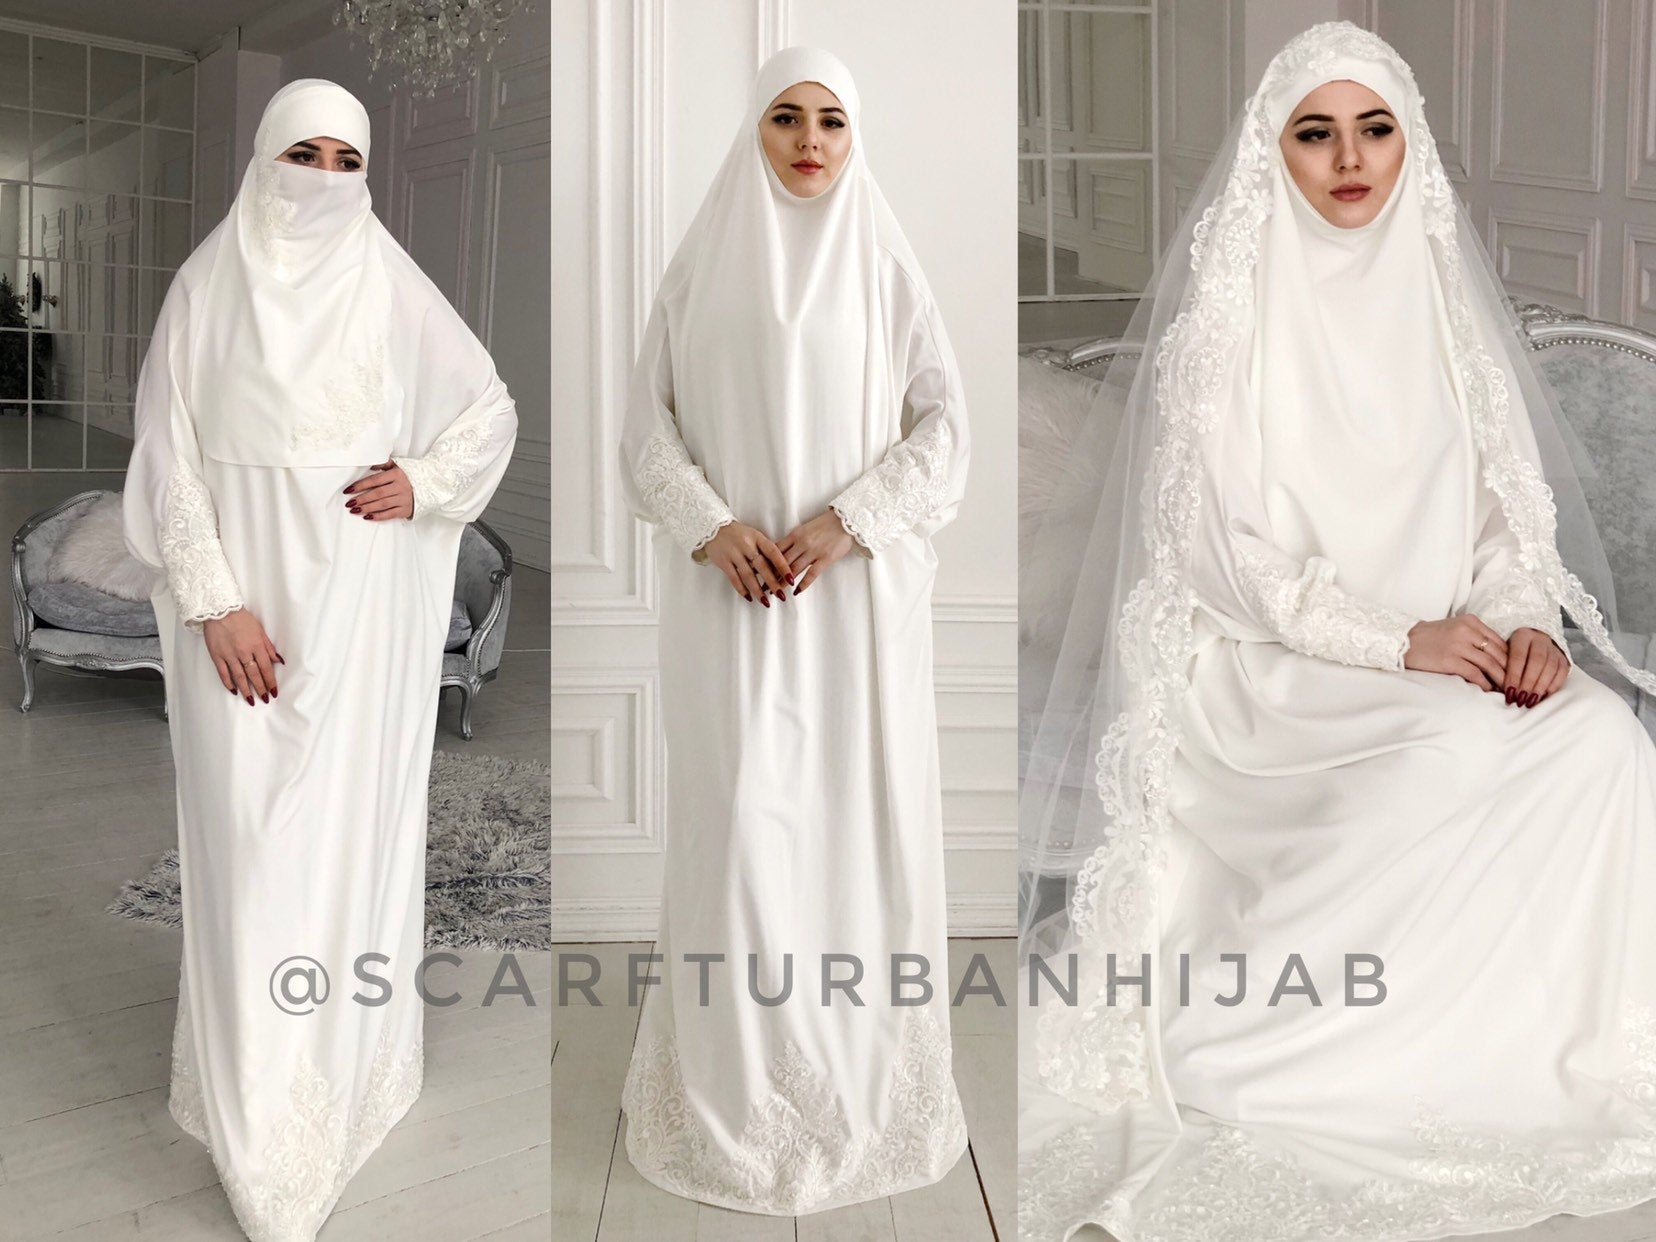 Gorgeous Wedding Jilbab With Niqab And Veil –